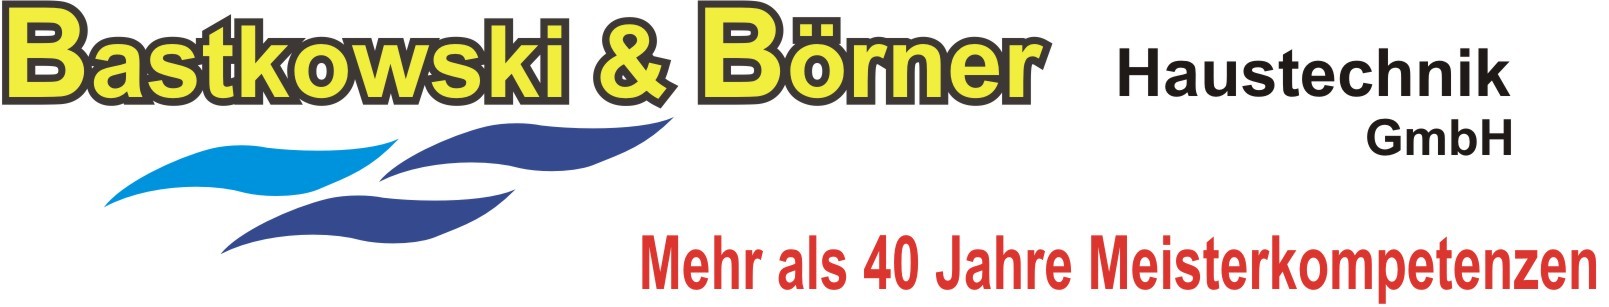 Bastkowski & Börner Haustechnik GmbH